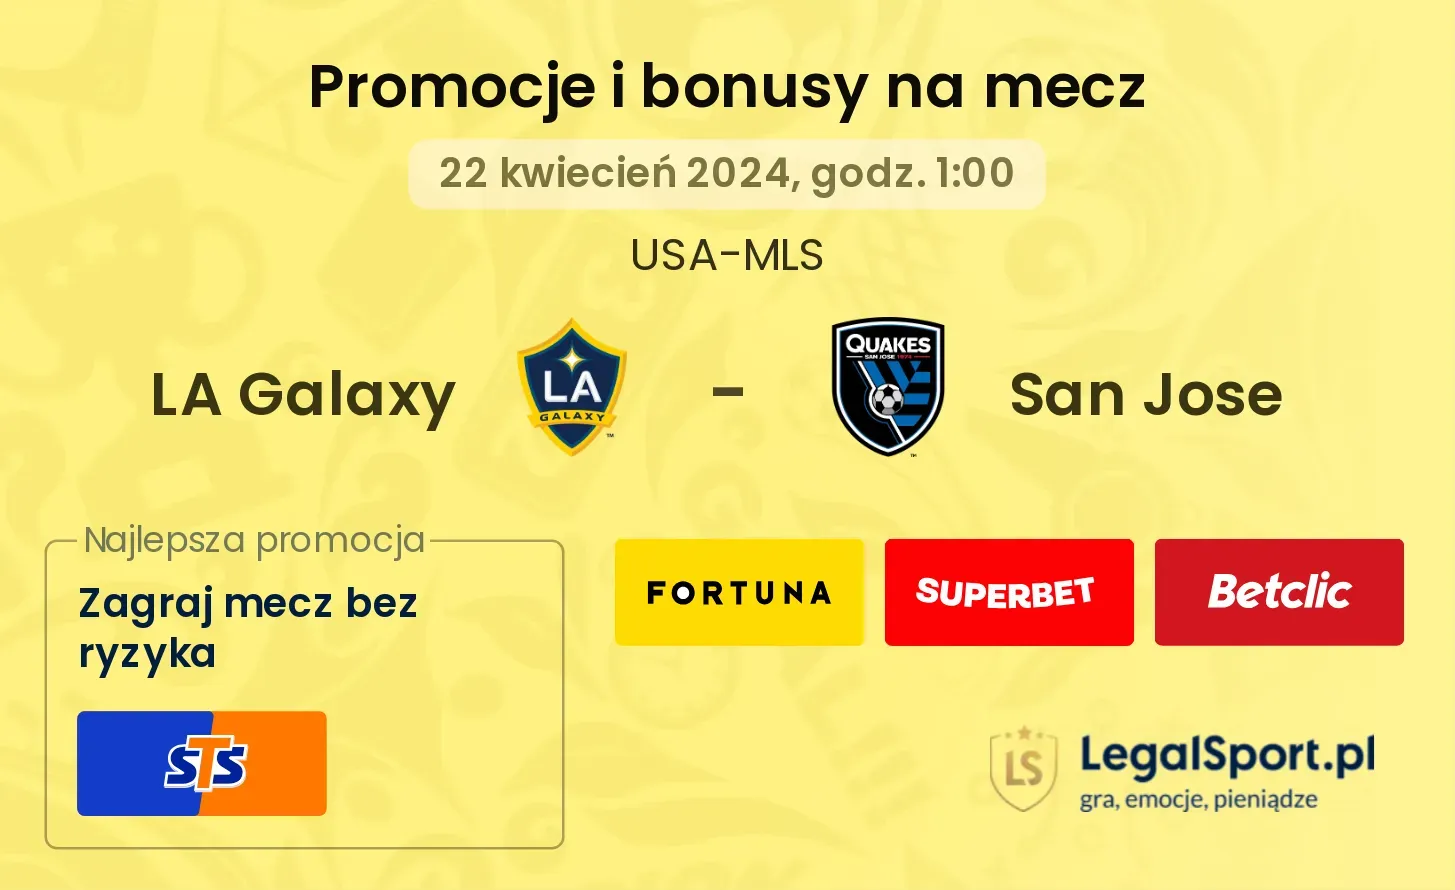 LA Galaxy - San Jose promocje bonusy na mecz